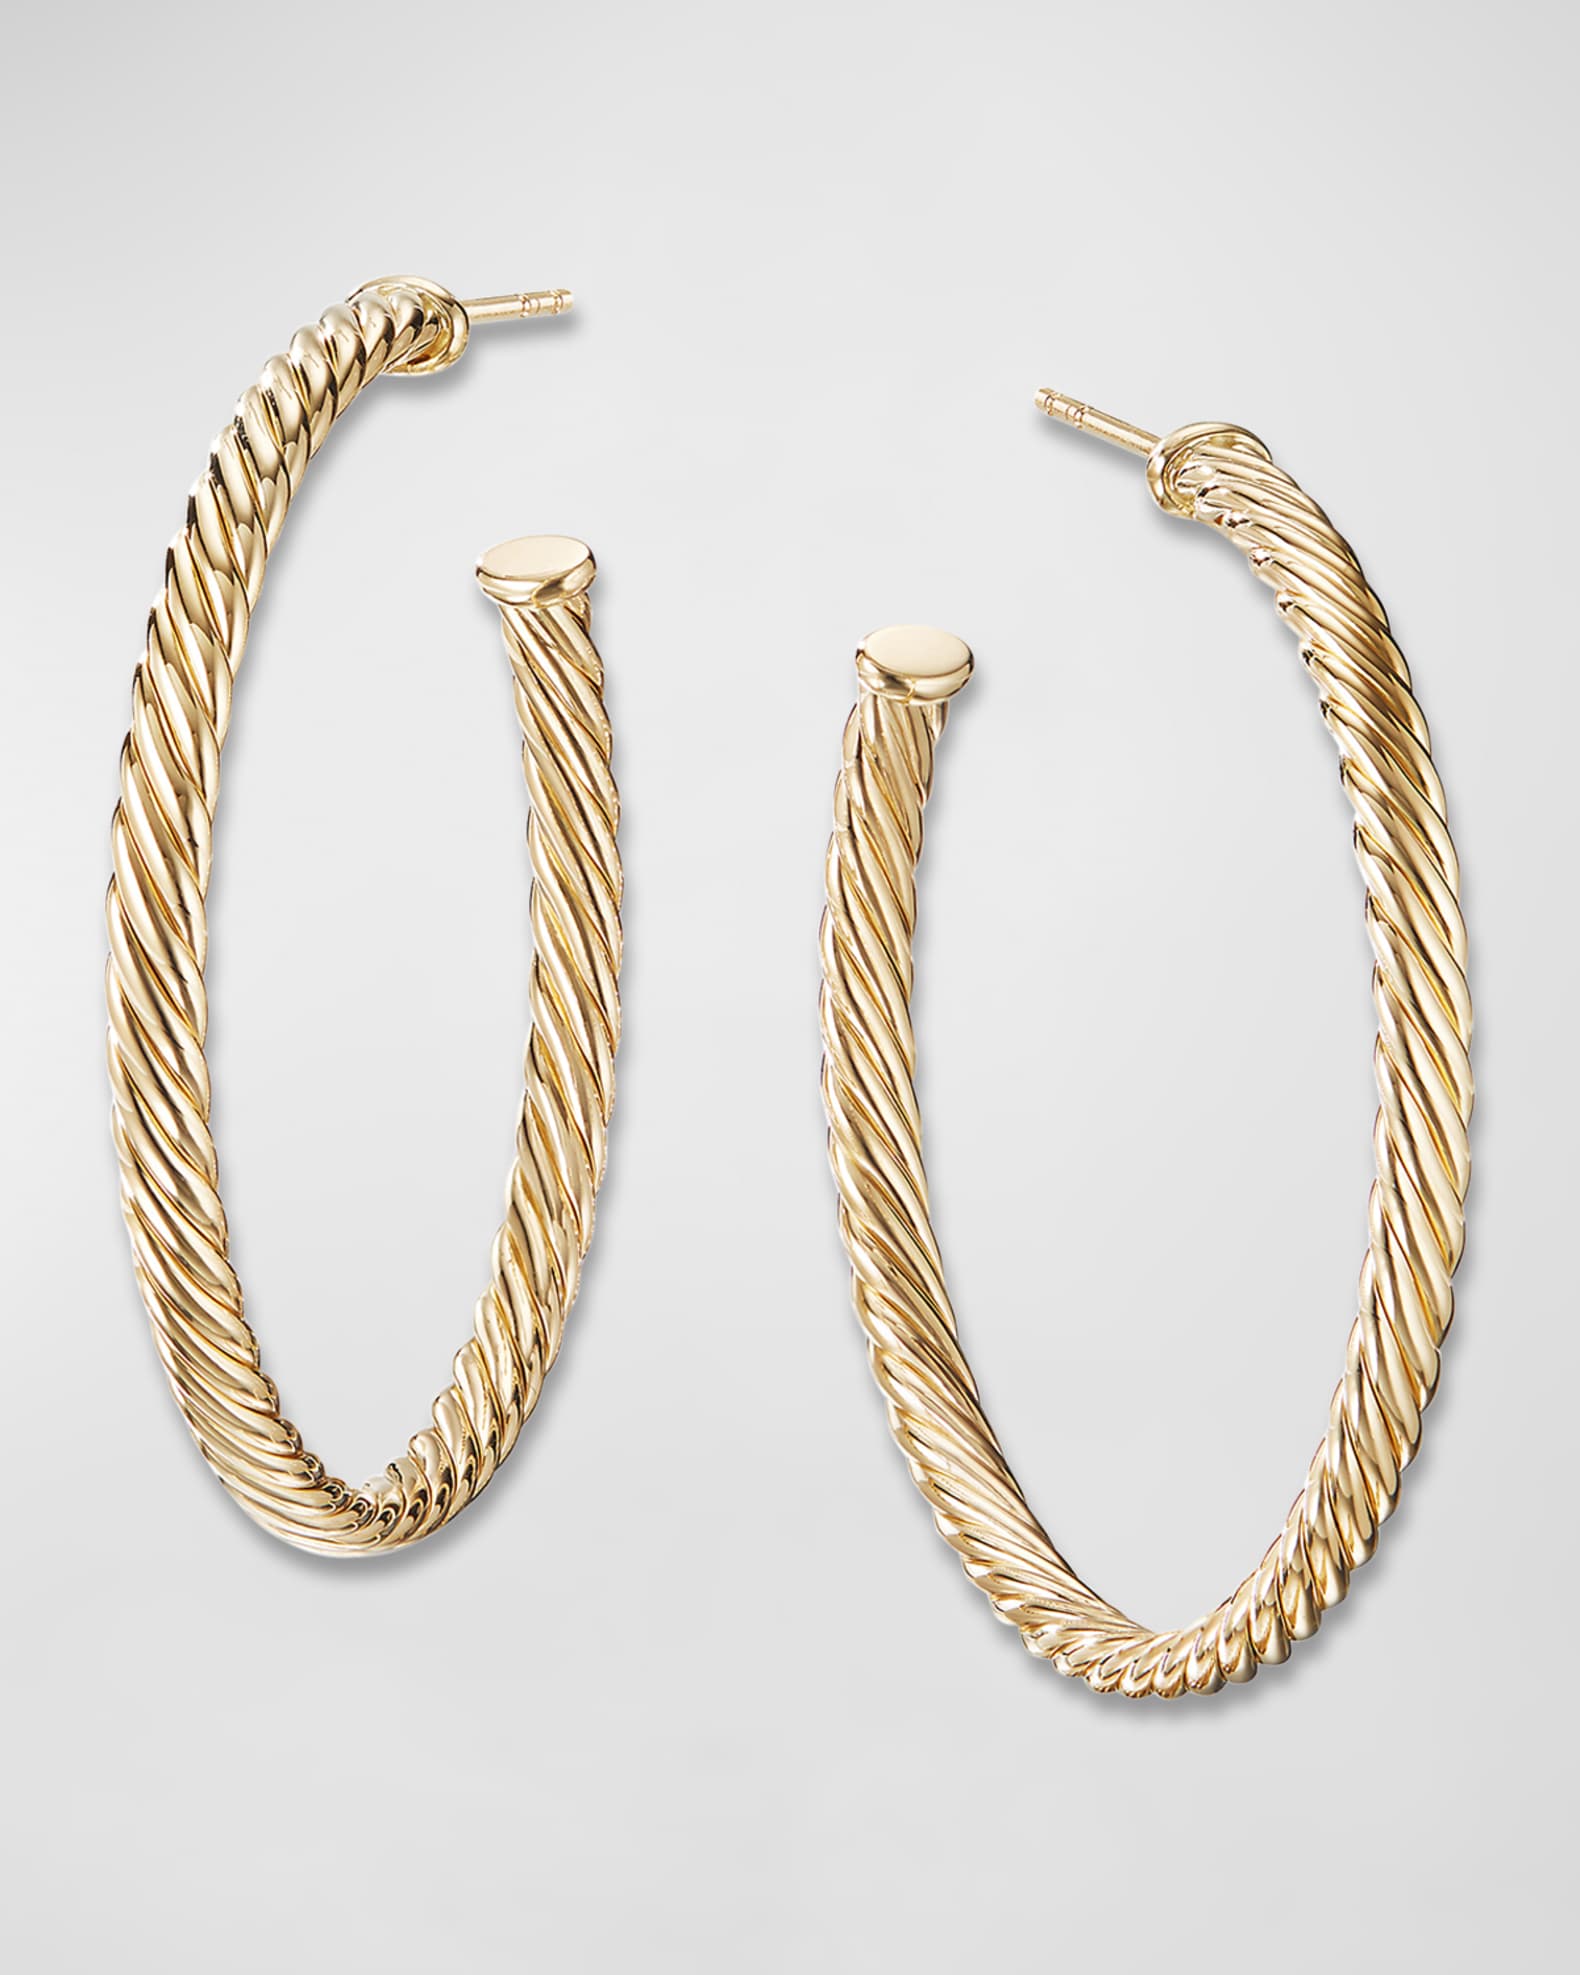 David Yurman Cablespira Hoop Earrings in 18k Gold | Neiman Marcus